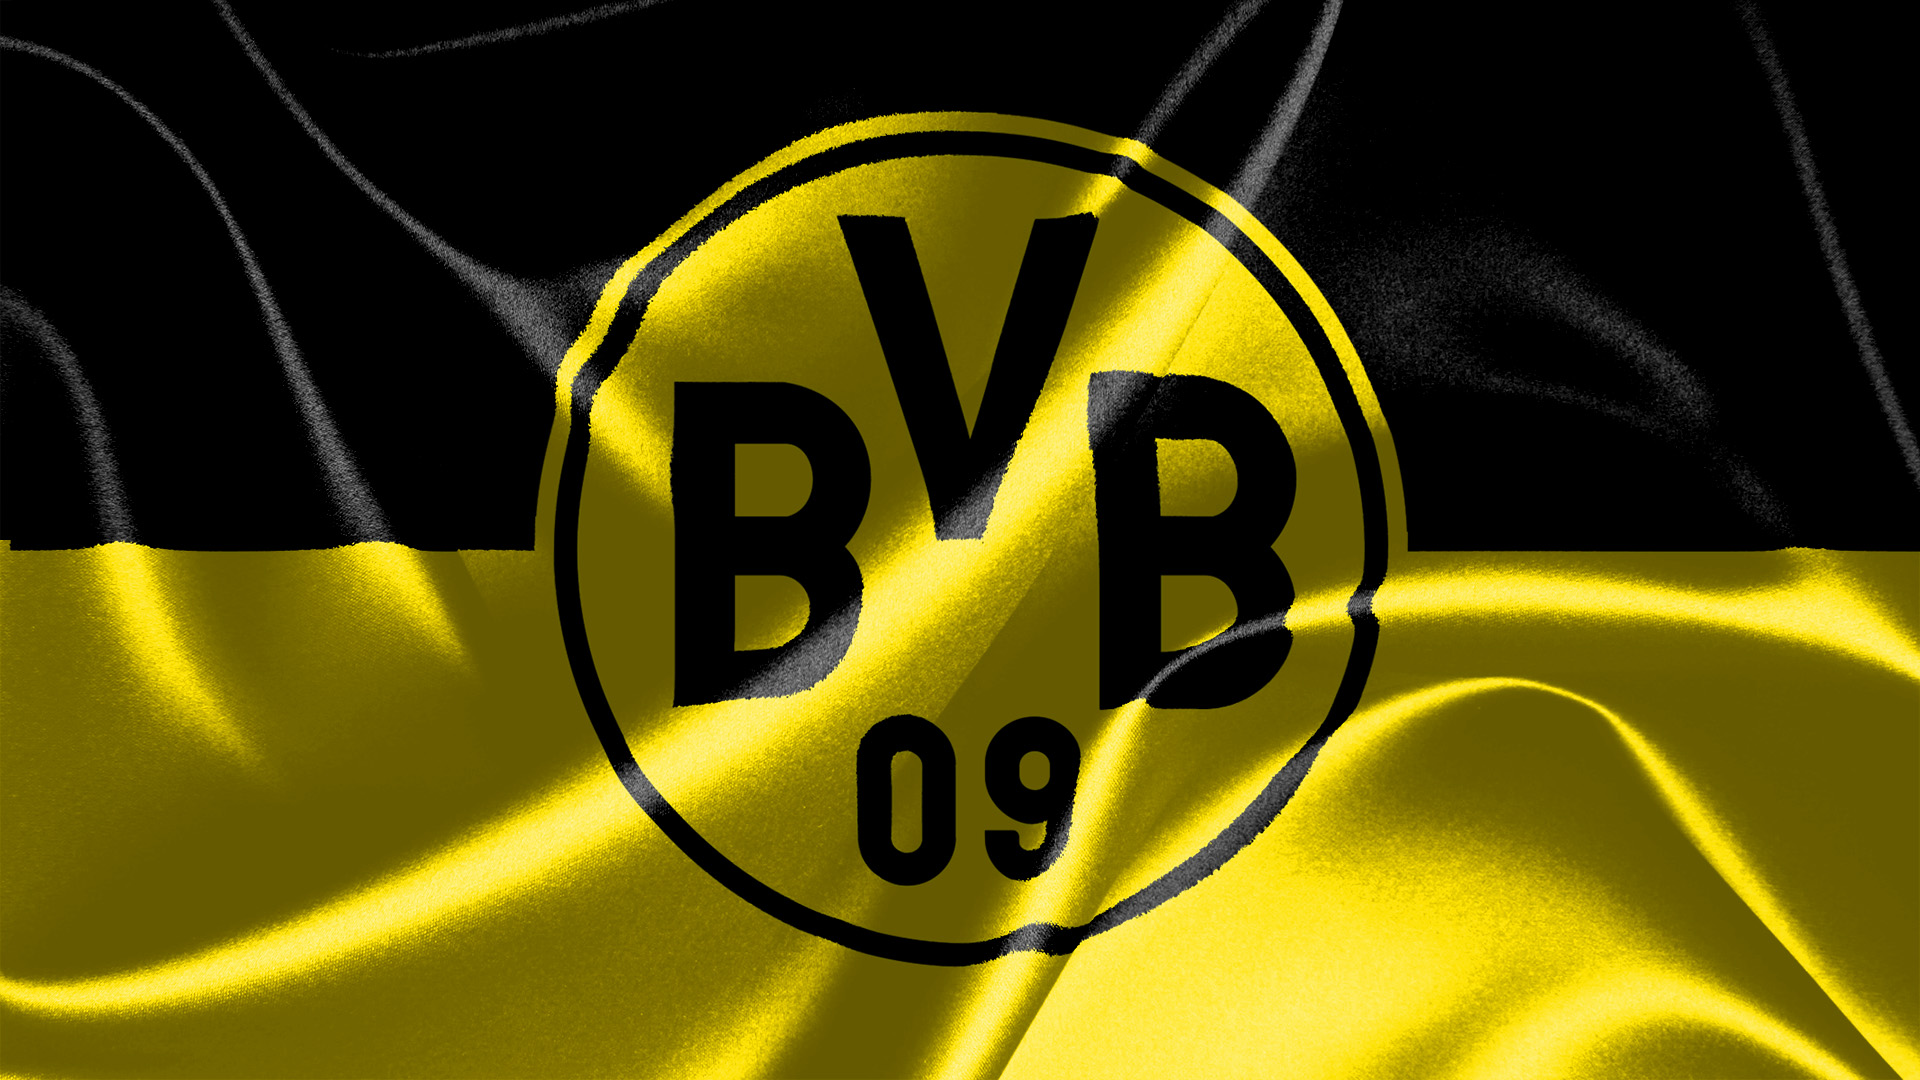 Bvb Logo Download Kostenlos